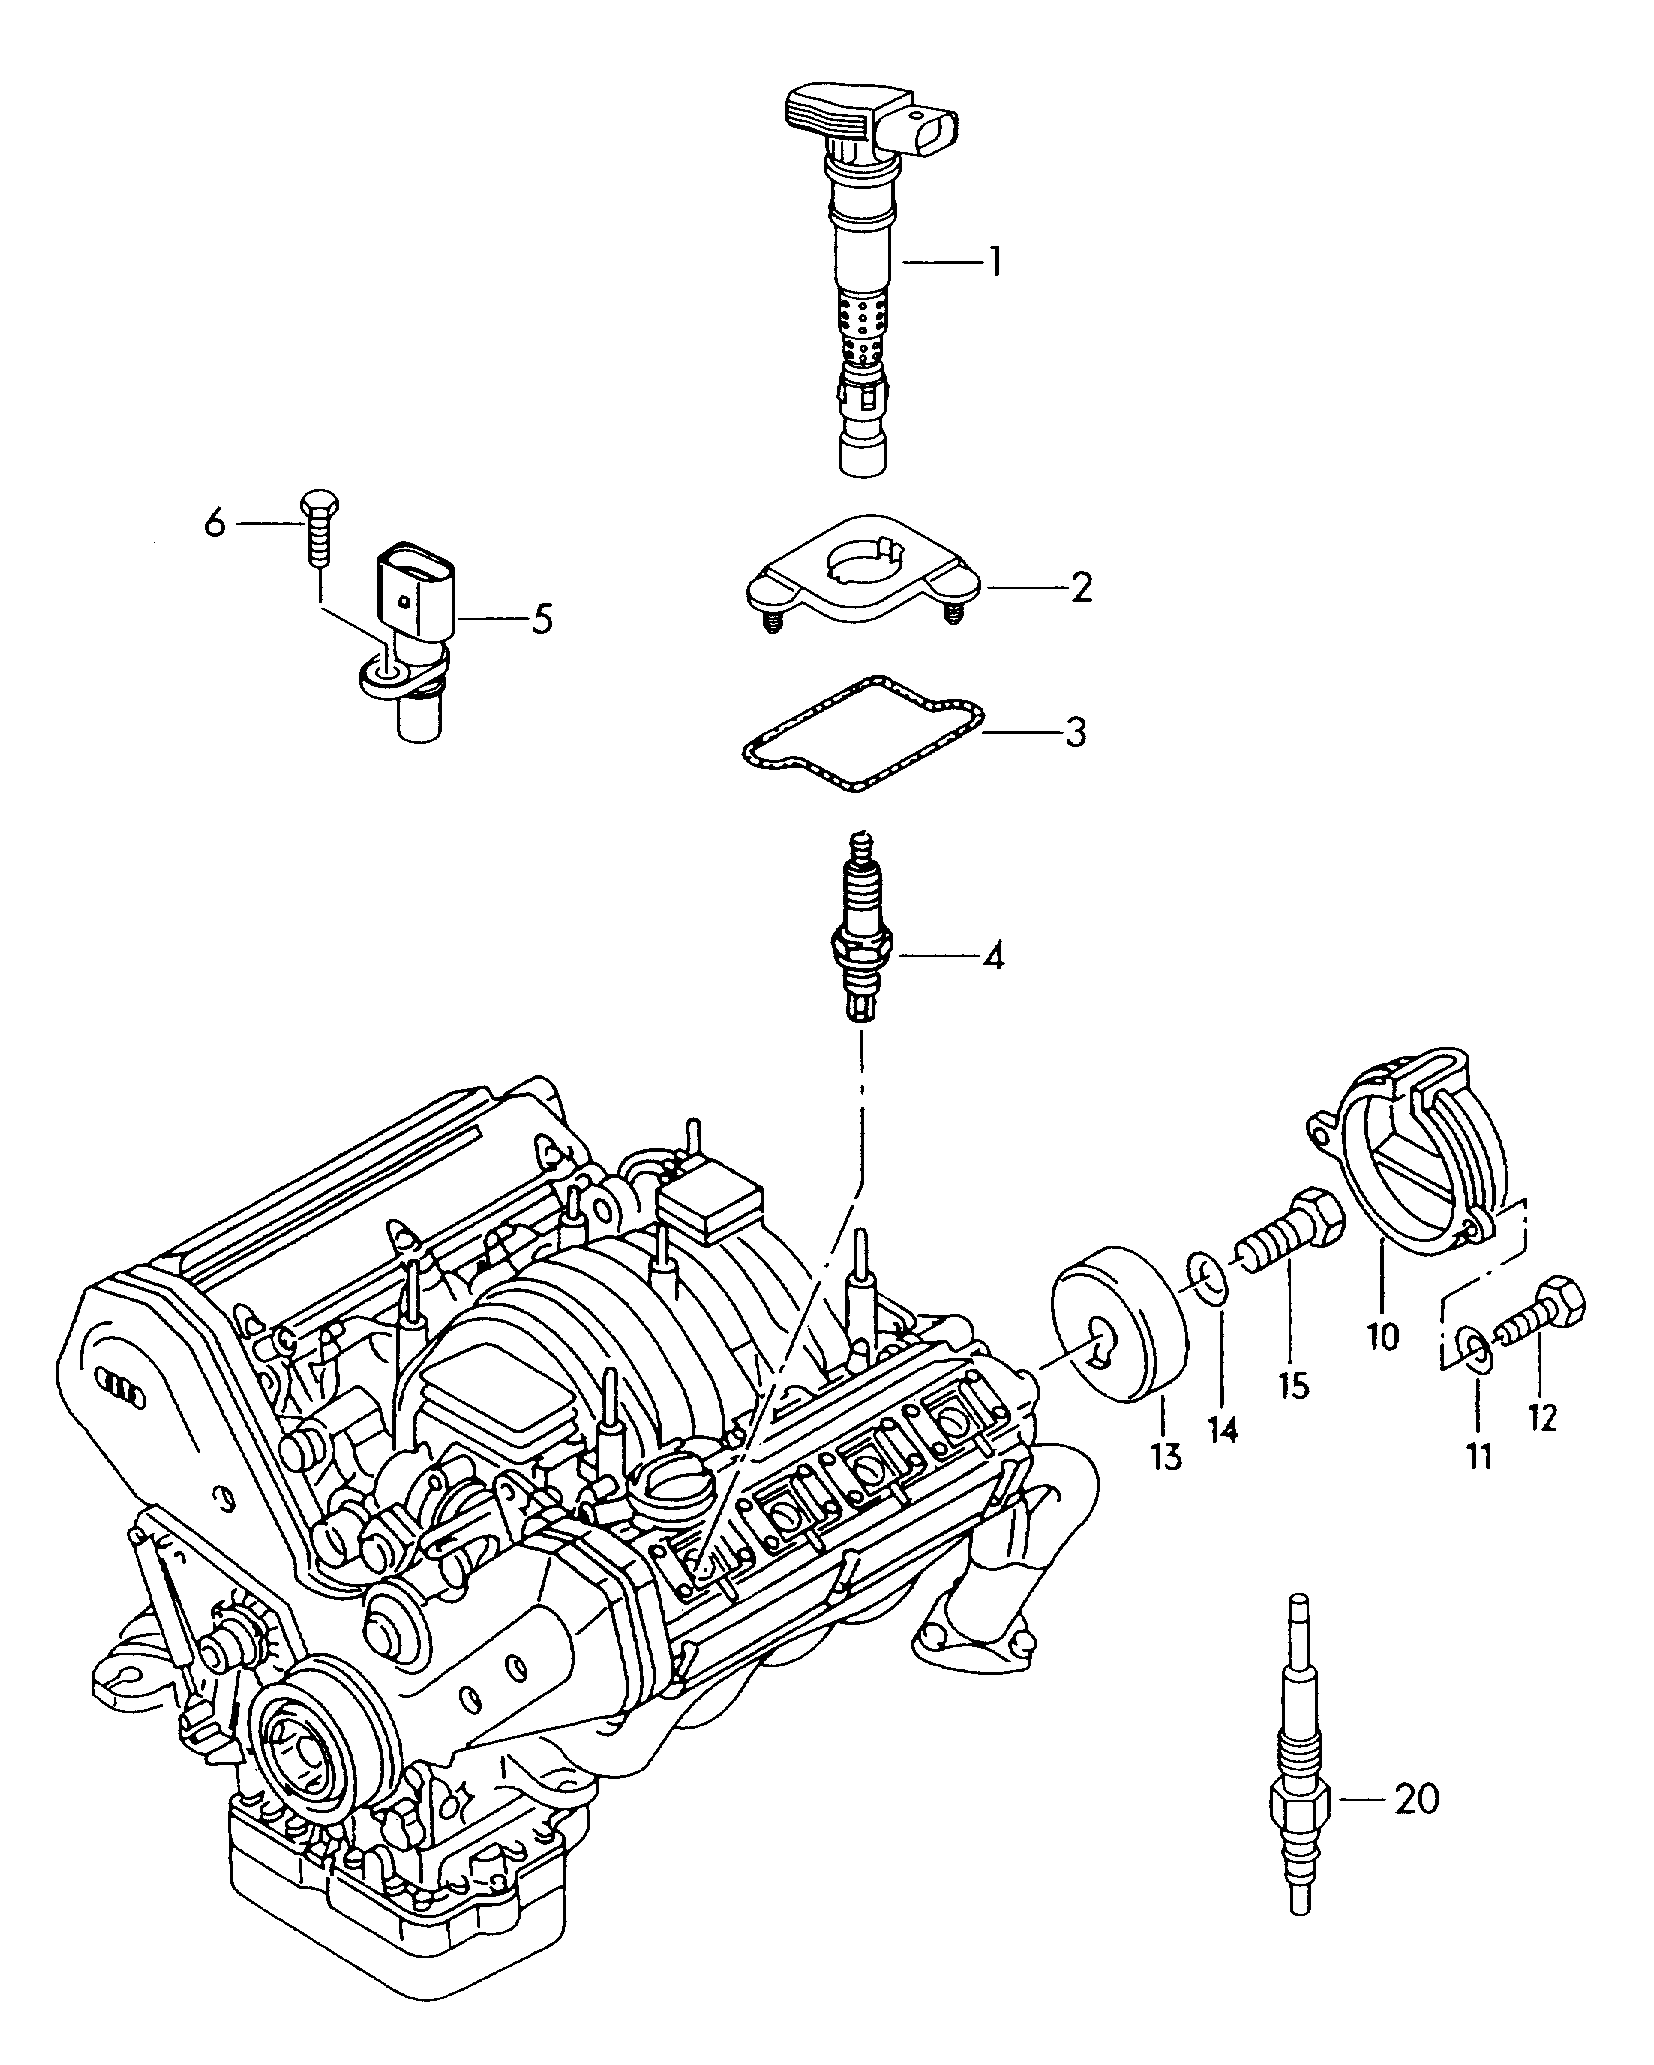 ignition coil; spark plug; hall sensor - Touareg(TOUA)  